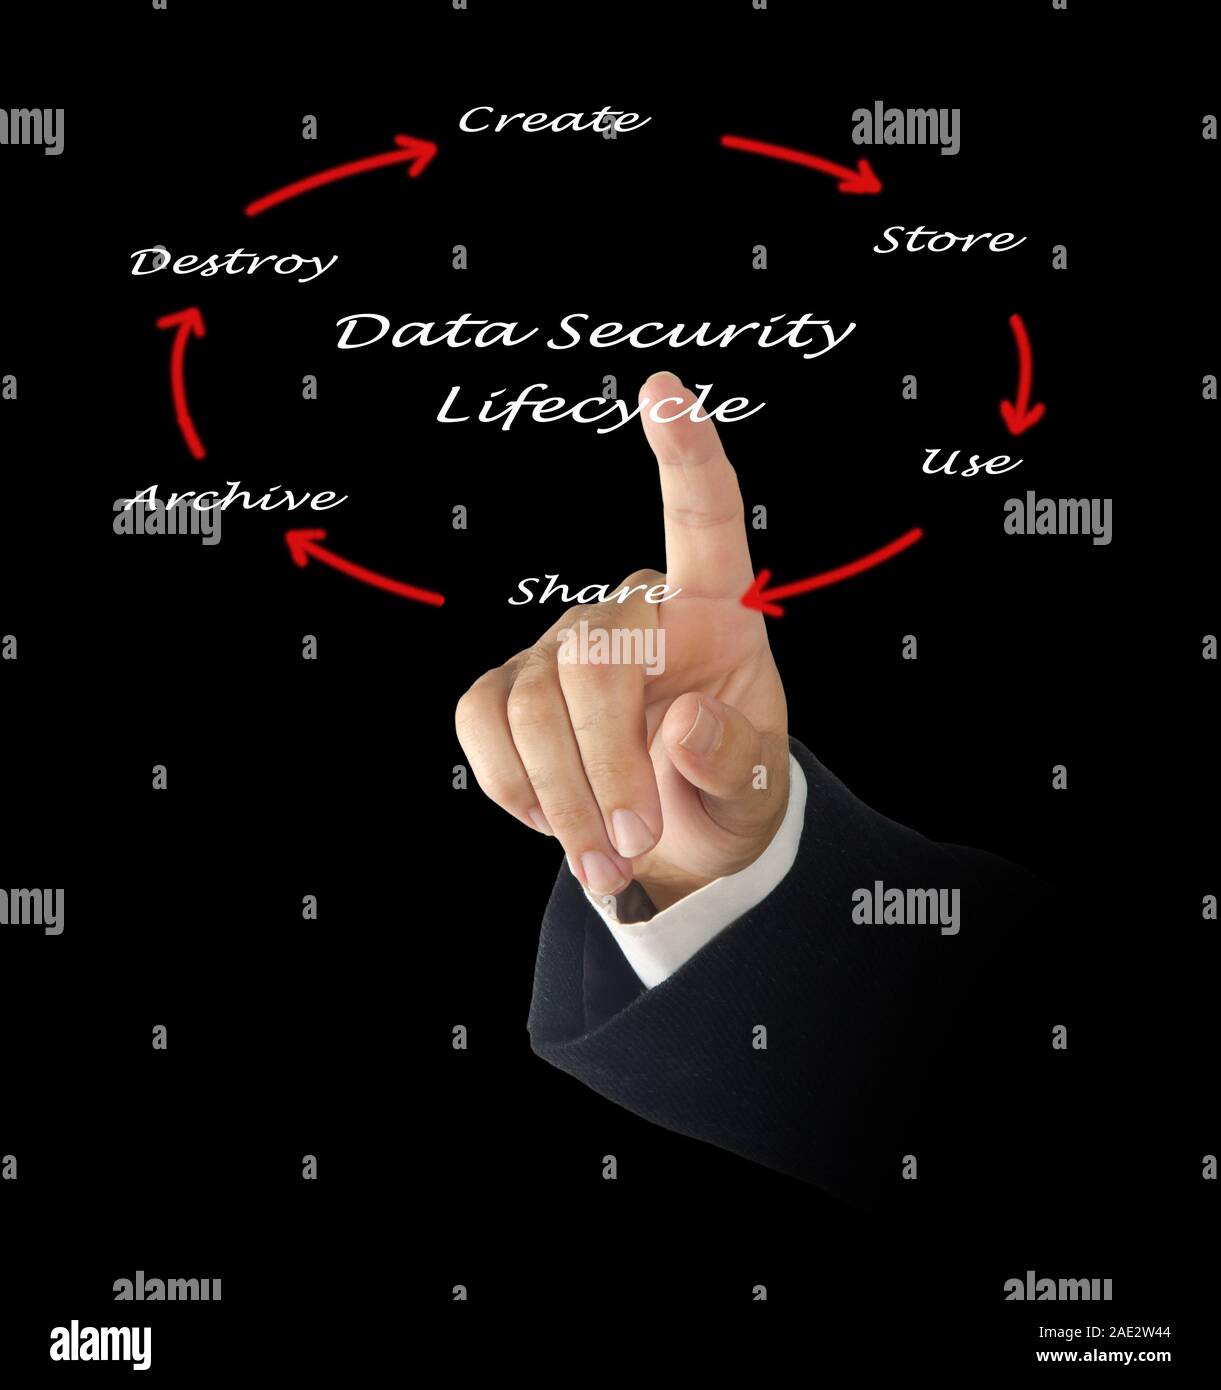 Data Security Lifecycle Stockfoto